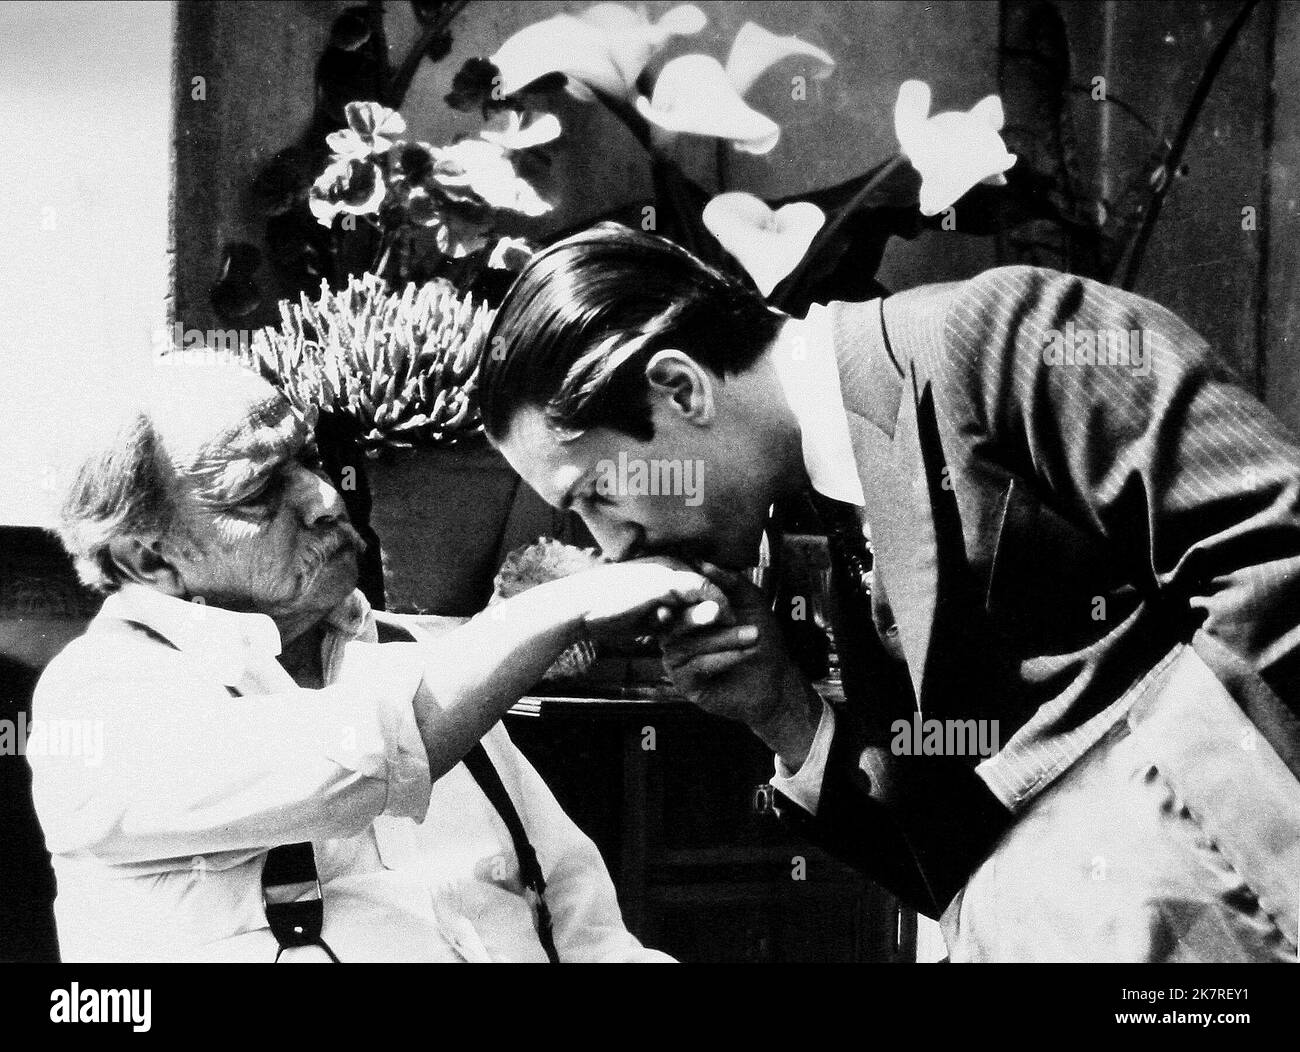 The godfather part ii robert de niro Black and White Stock Photos & Images  - Alamy